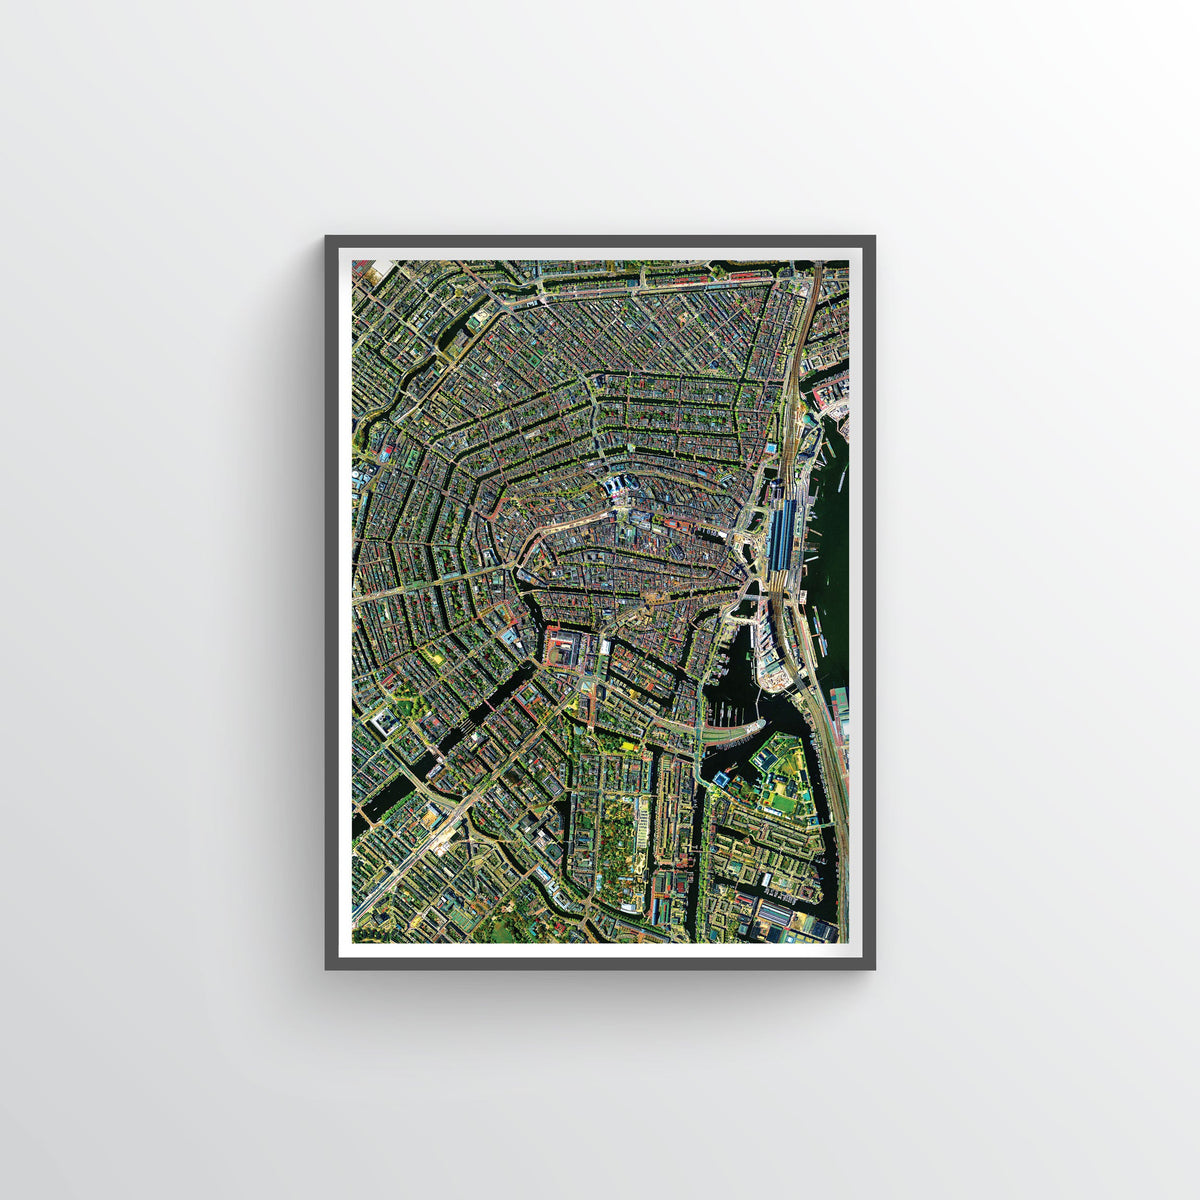 Amsterdam Earth Photography - Art Print